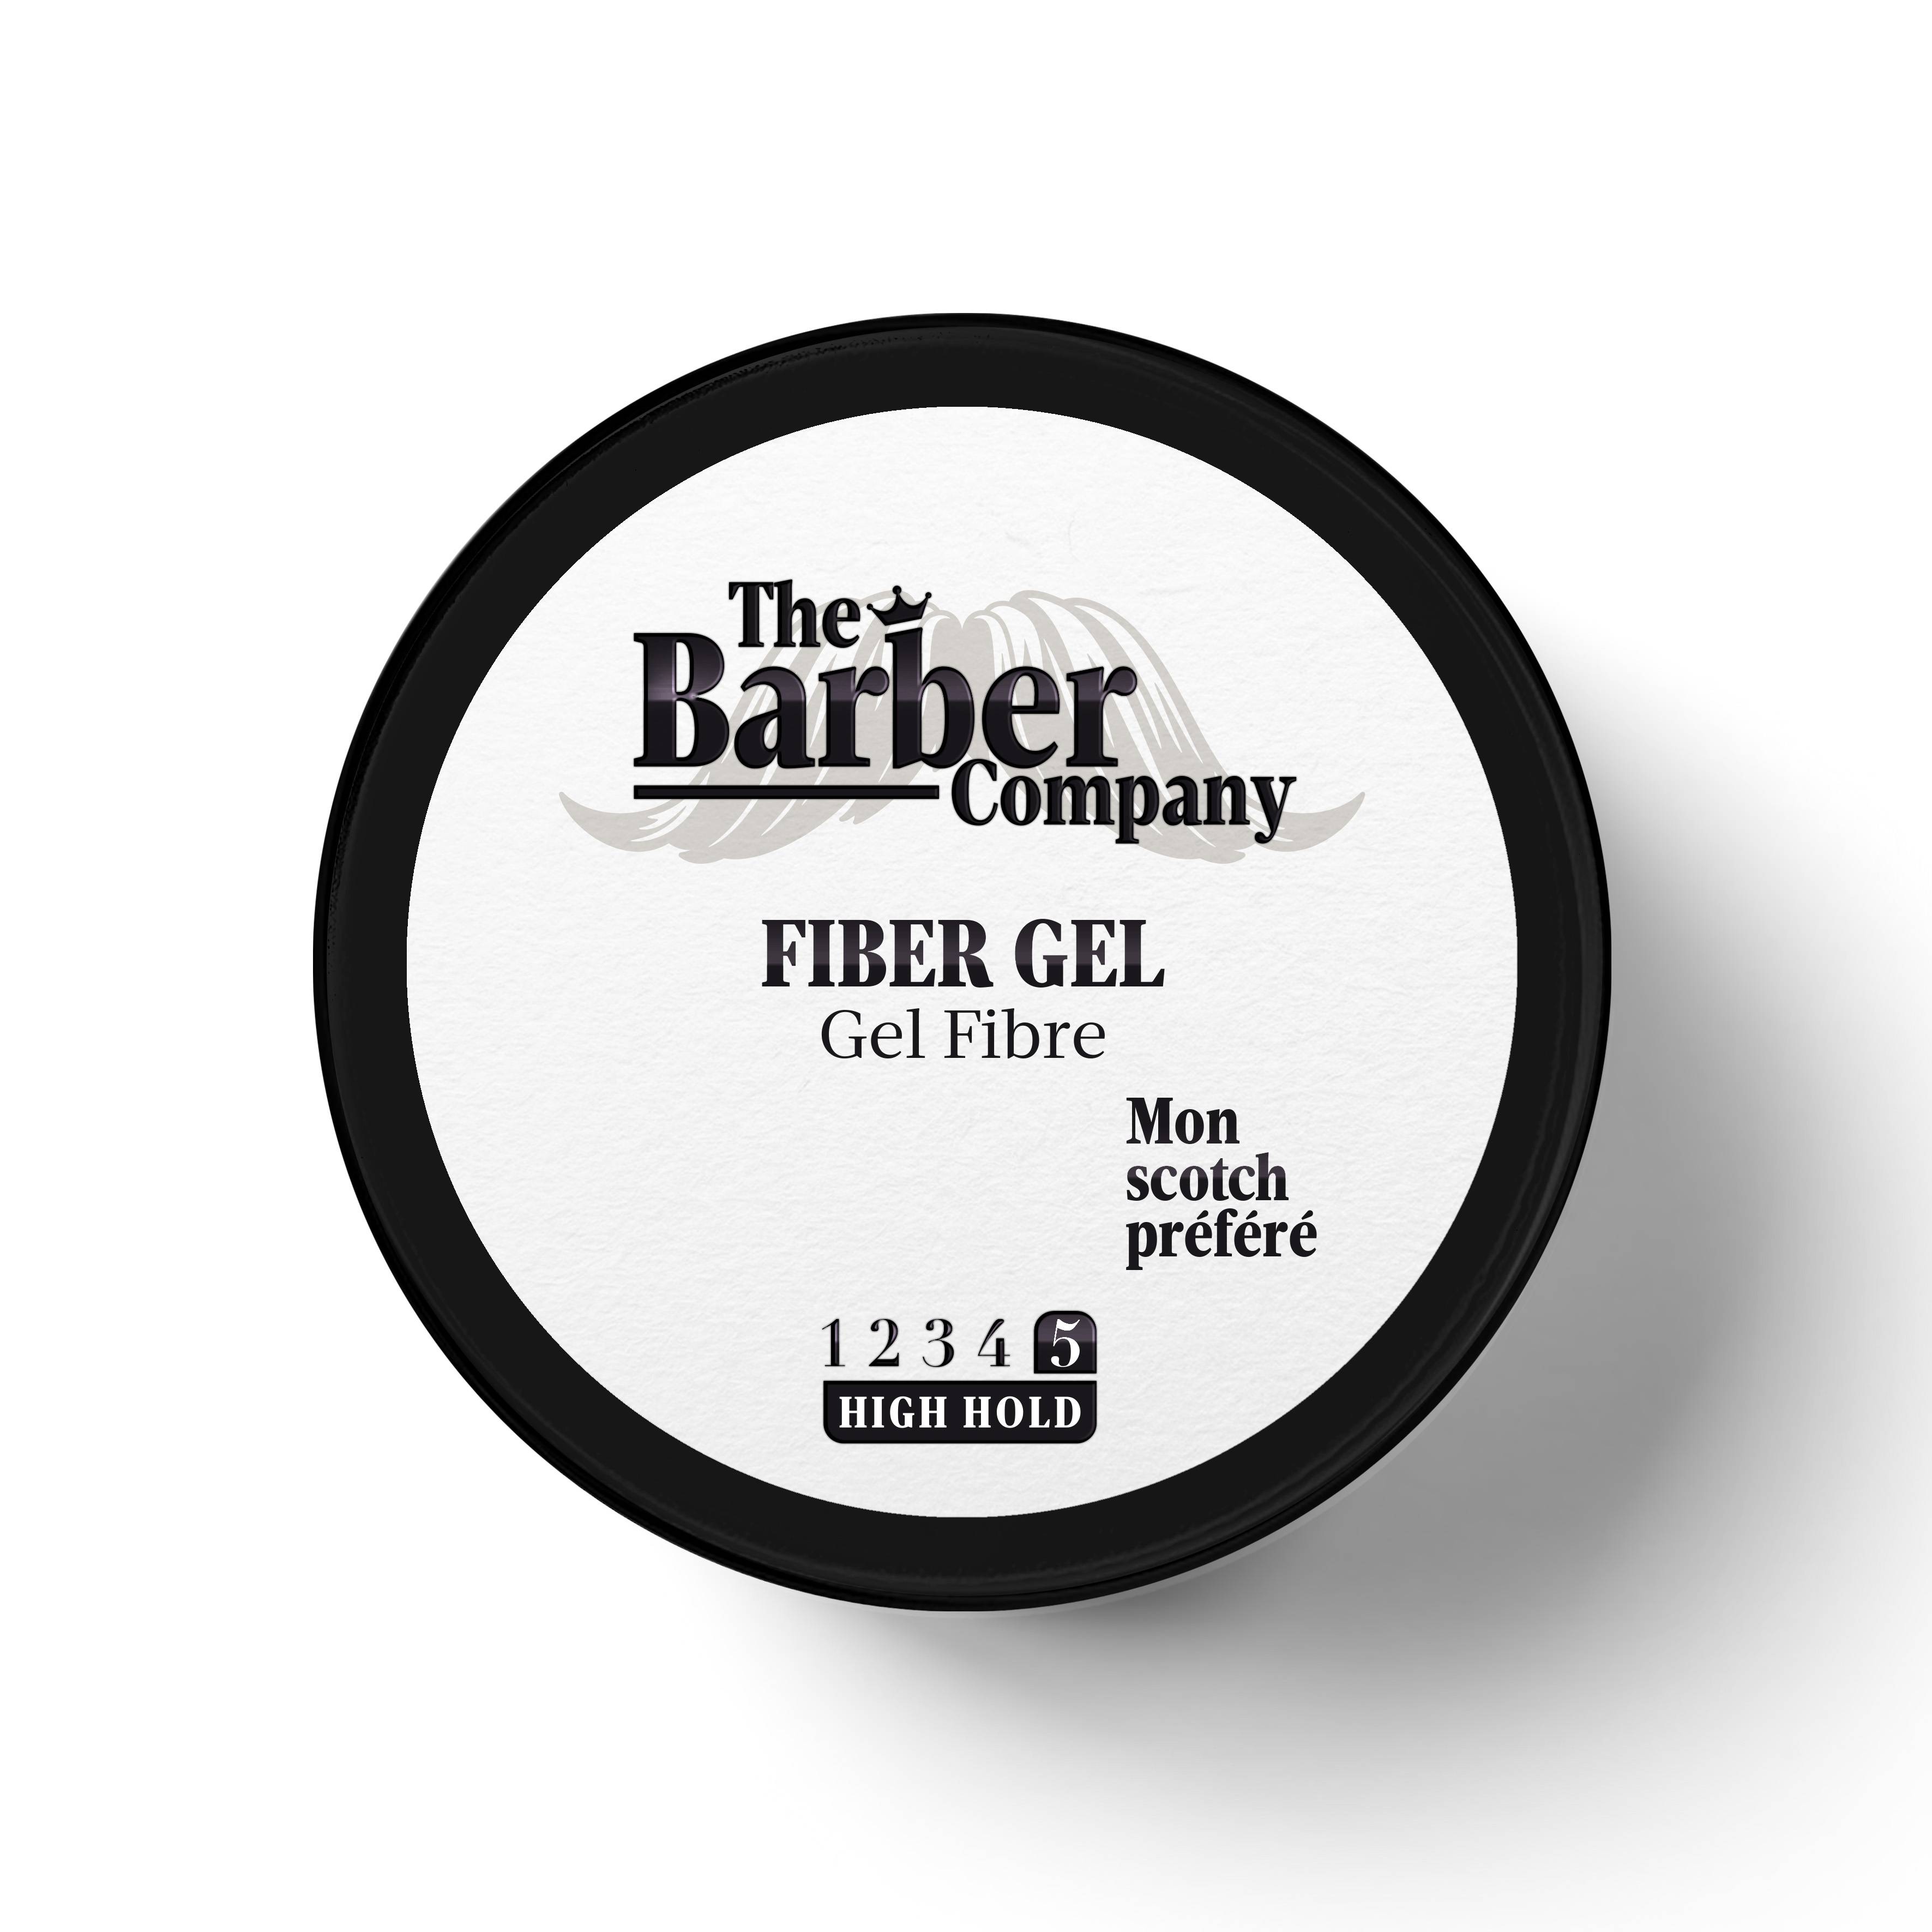 Gel fibre 75g The Barber Company